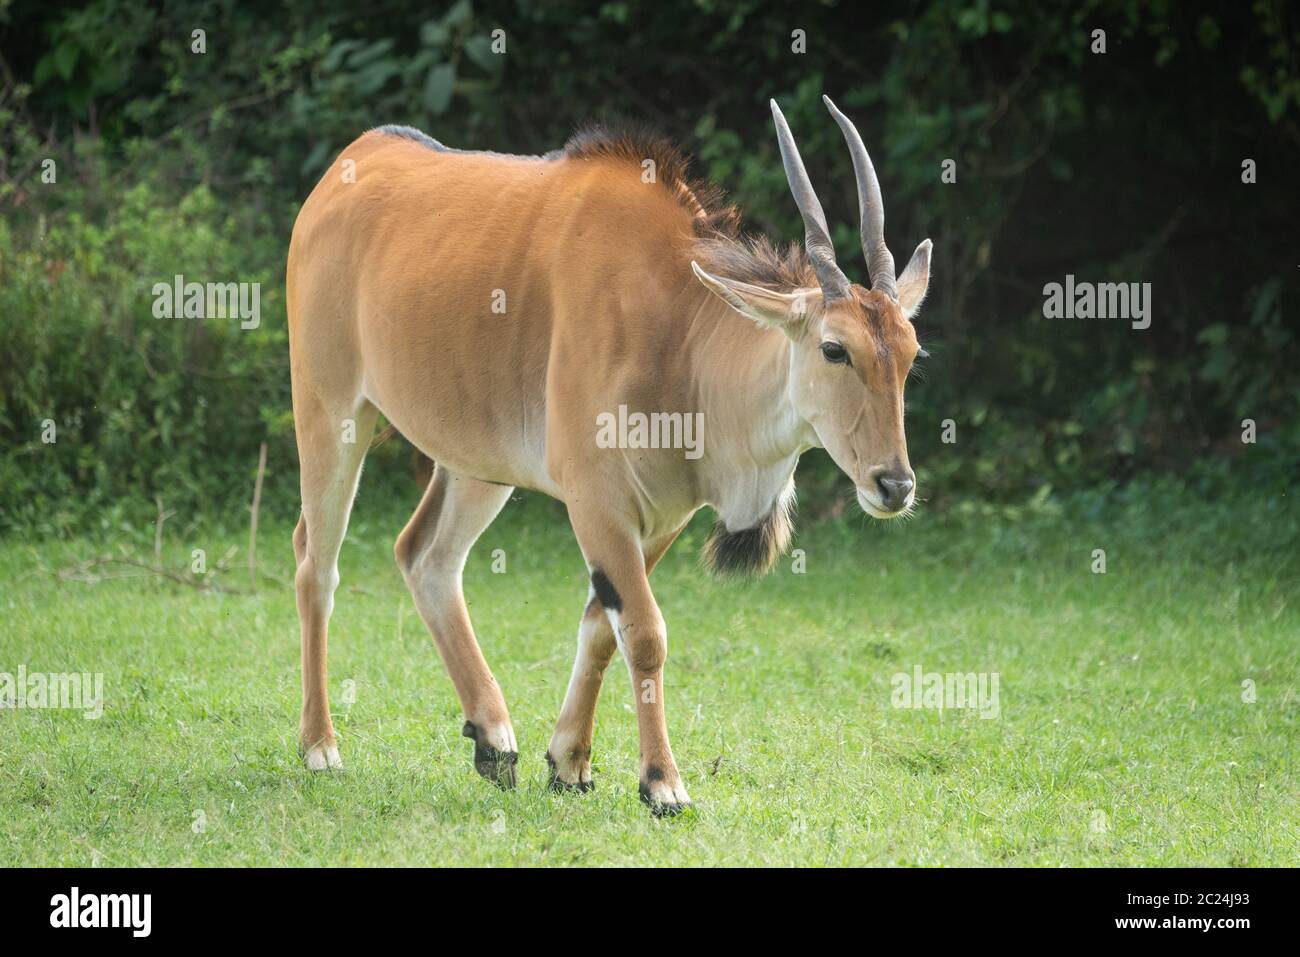 Common eland walks across grass near bushes Stock Photo